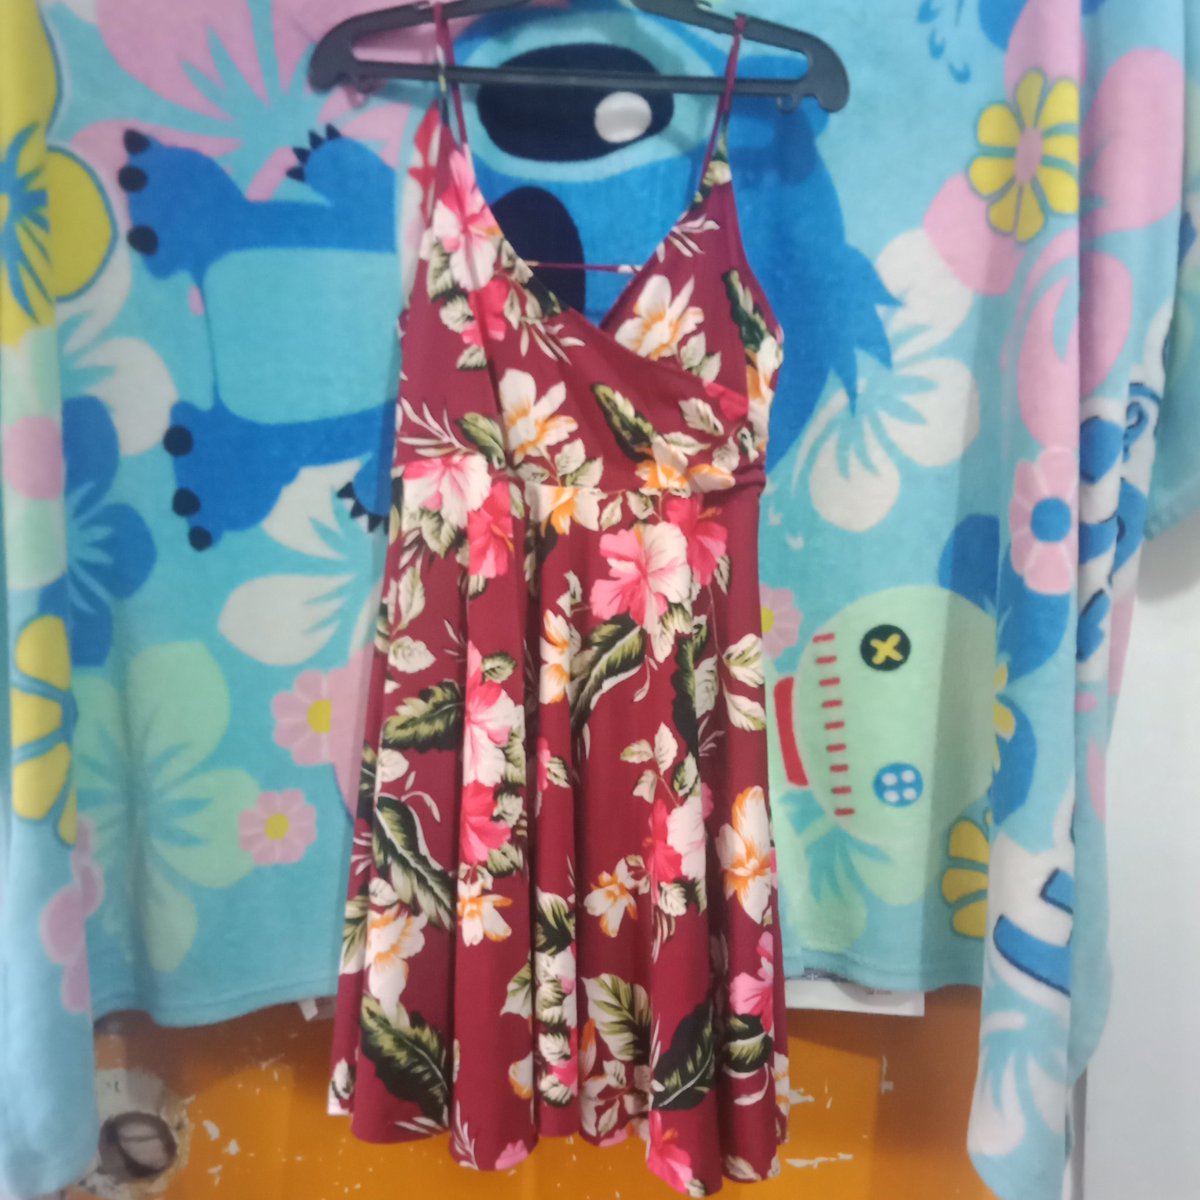 Floral dress (flowy haha)400 pesos